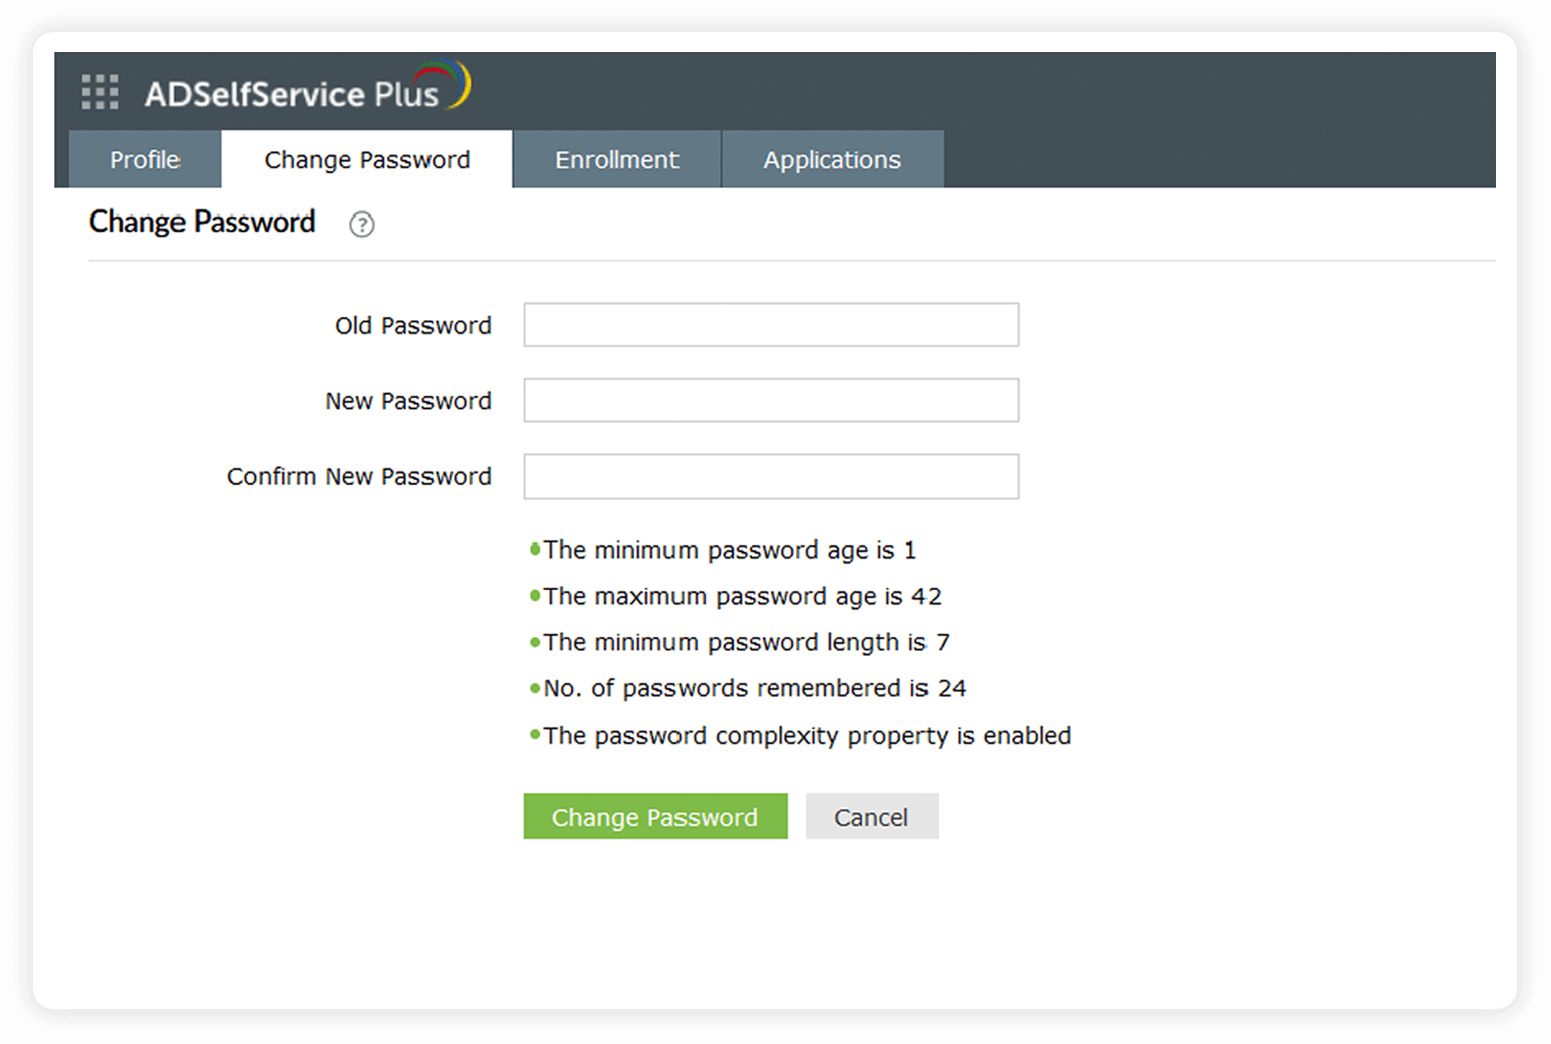 adselfservice-plus-change-password-screen